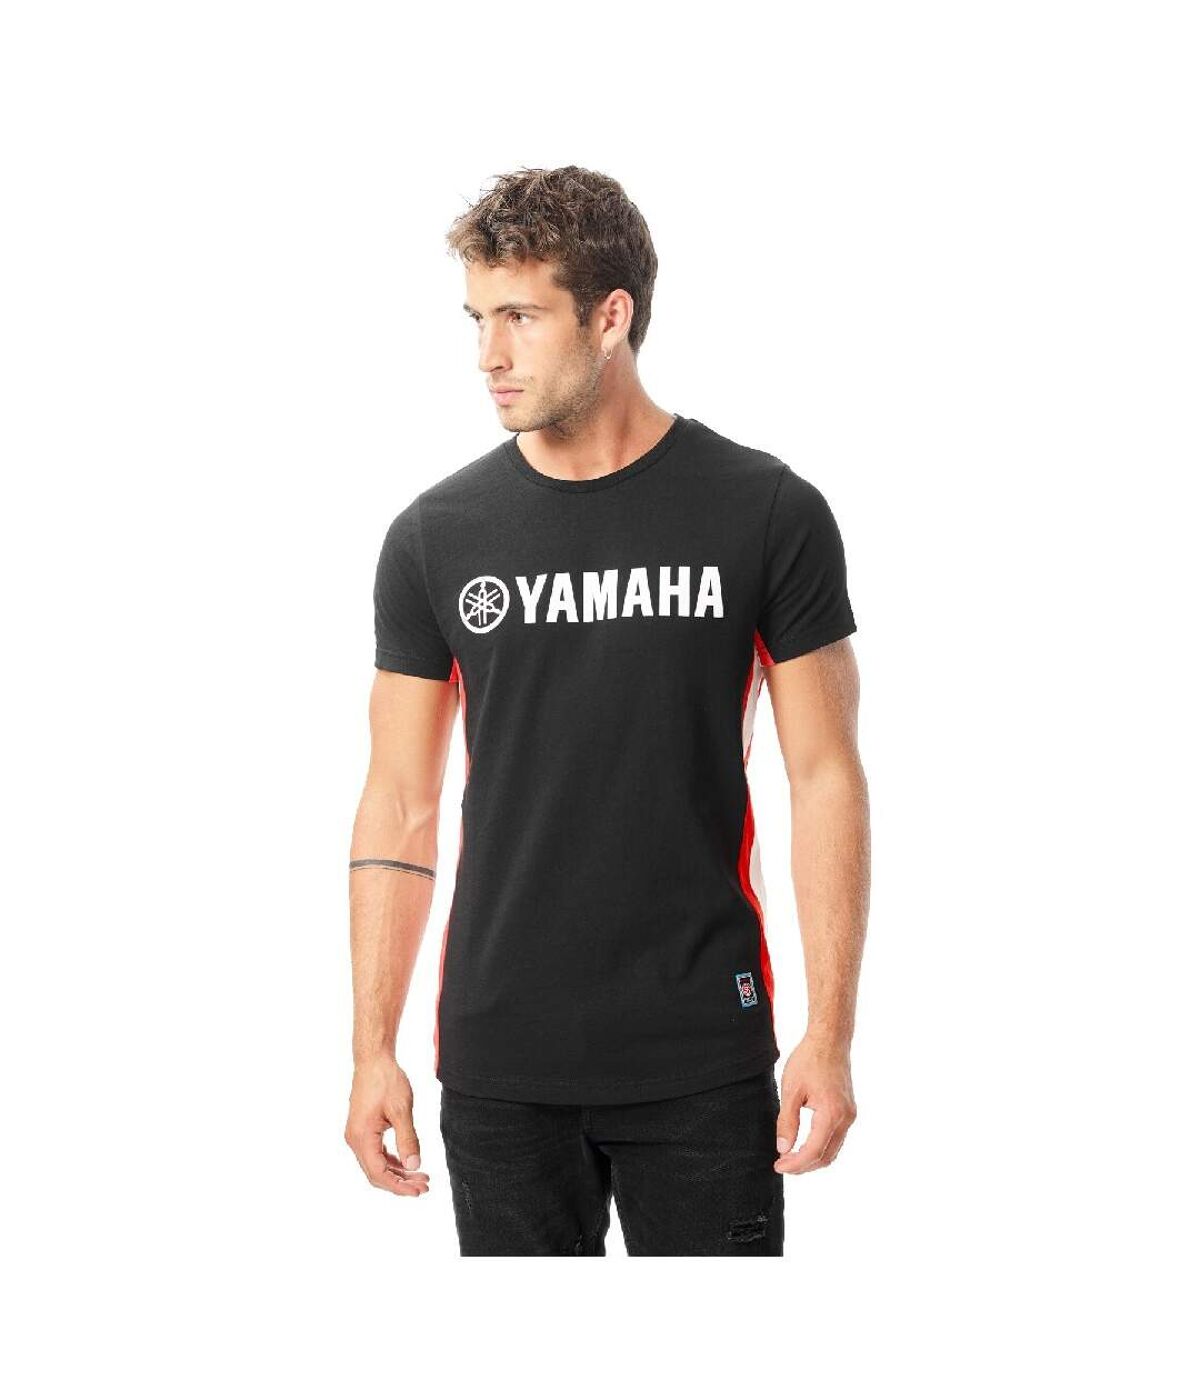 T shirt homme Racing comptatible Collection Textile Yamaha Outsiders- Assortiment modèles photos selon arrivages- T Shirt MC Side A